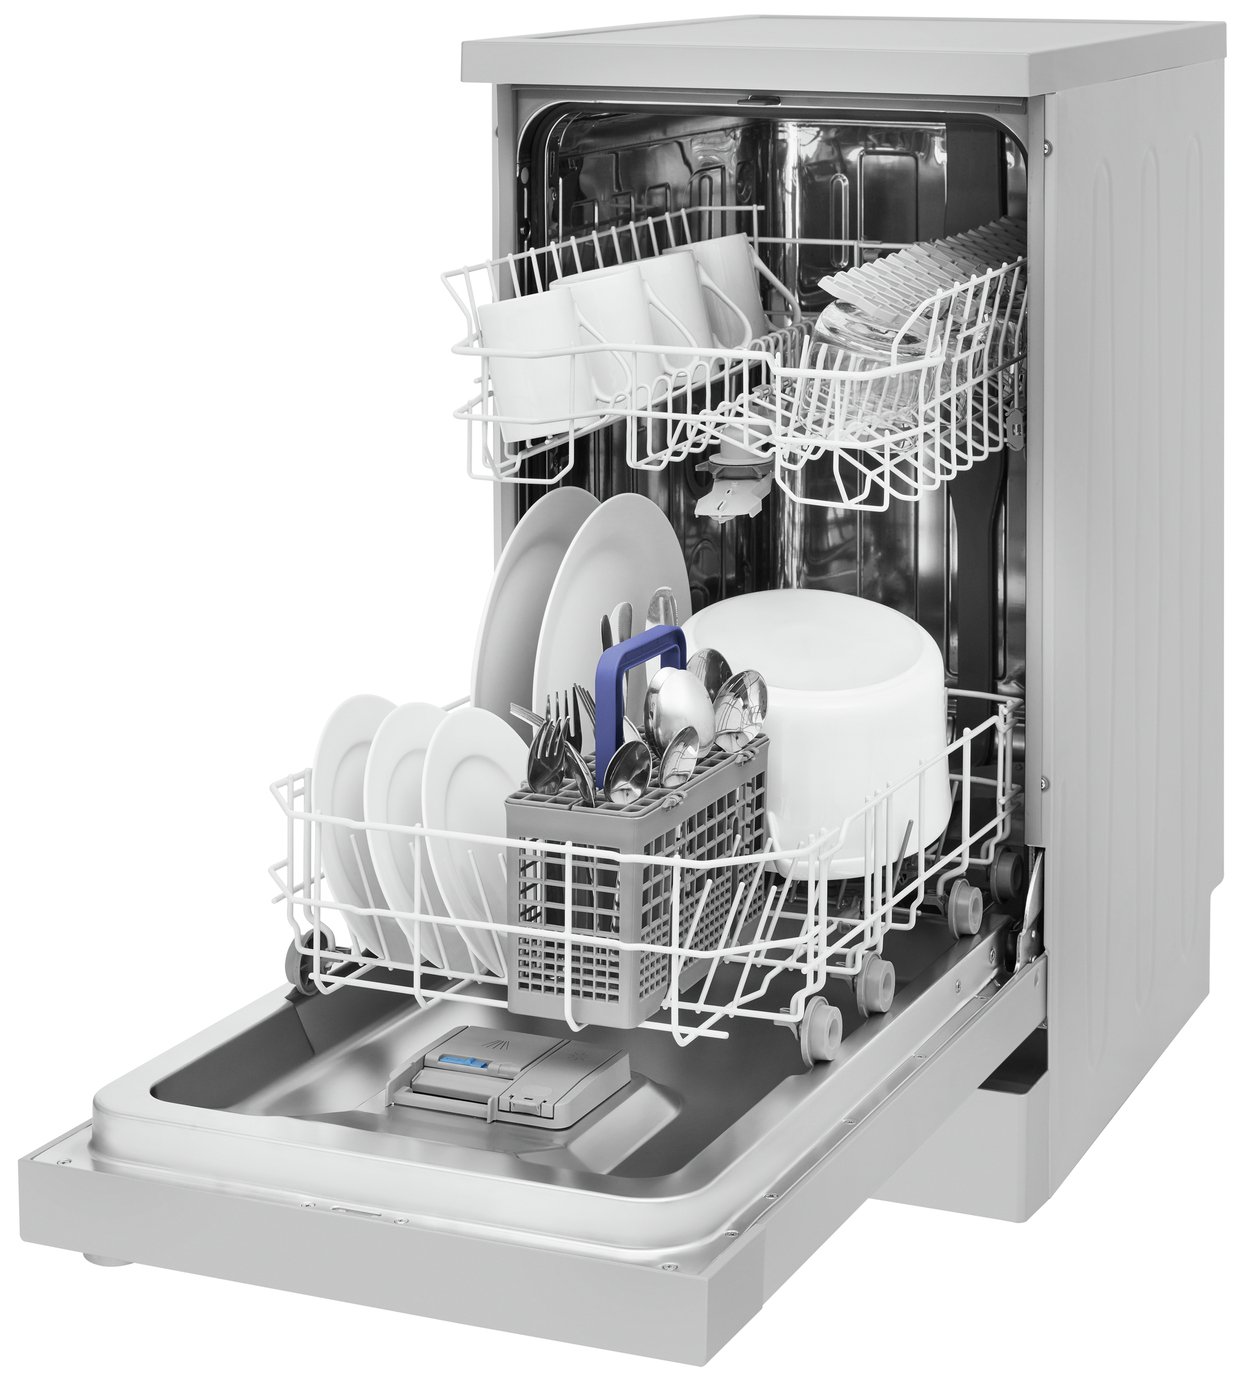 Beko DFS04010S Slimline Dishwasher Review